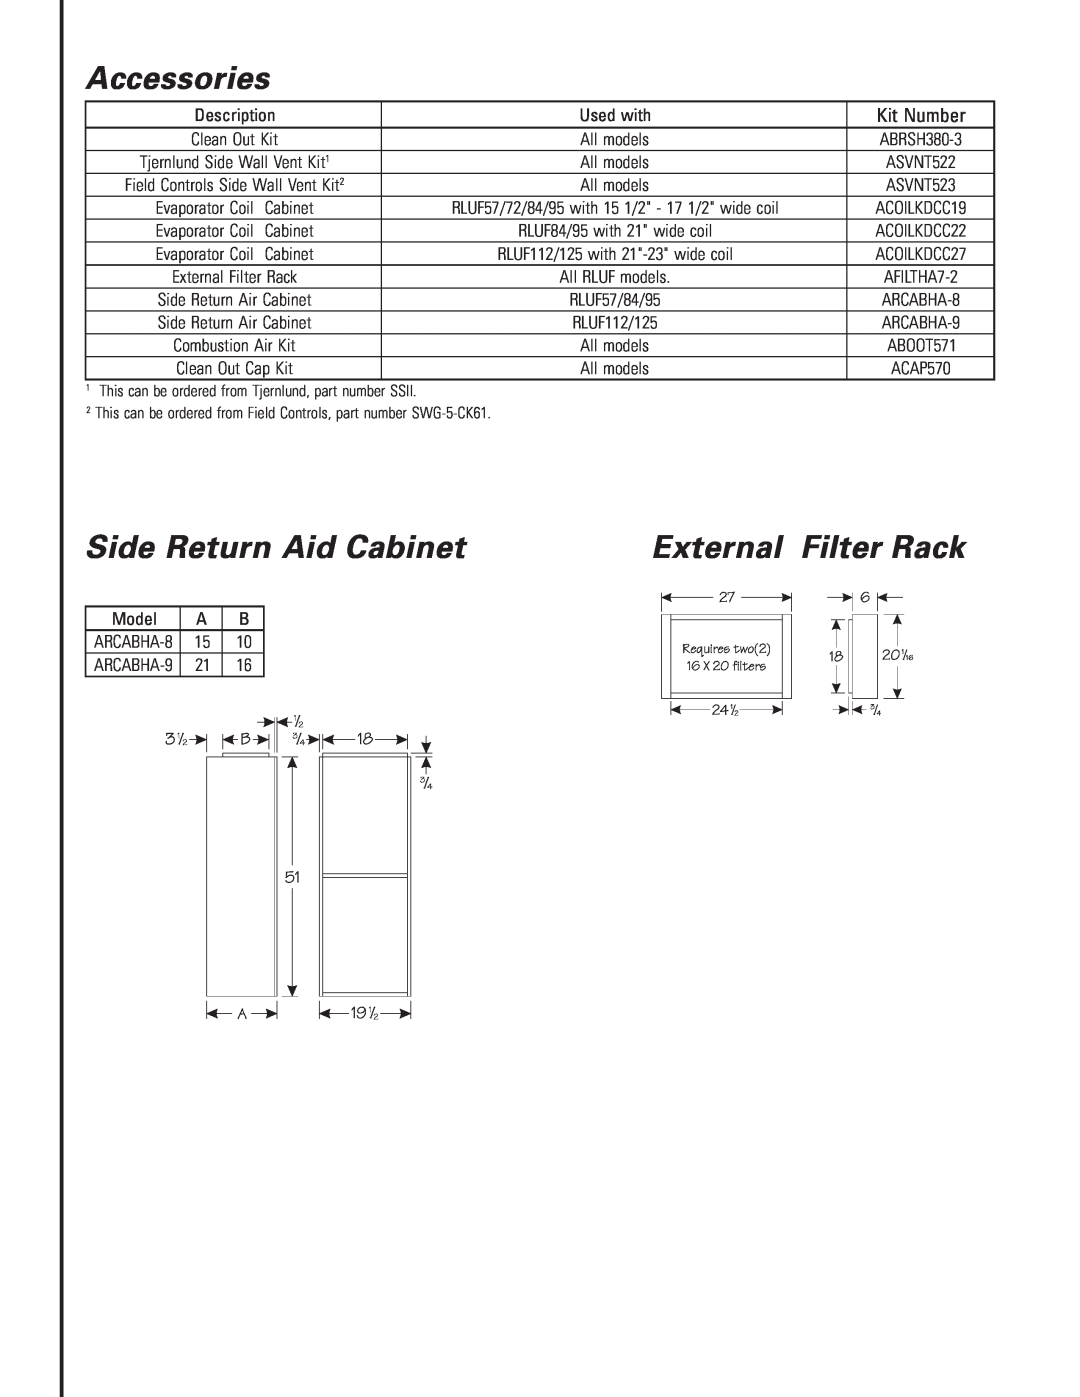 Ducane (HVAC) RLUF80C warranty Accessories, Side Return Aid Cabinet, External Filter Rack, Kit Number 